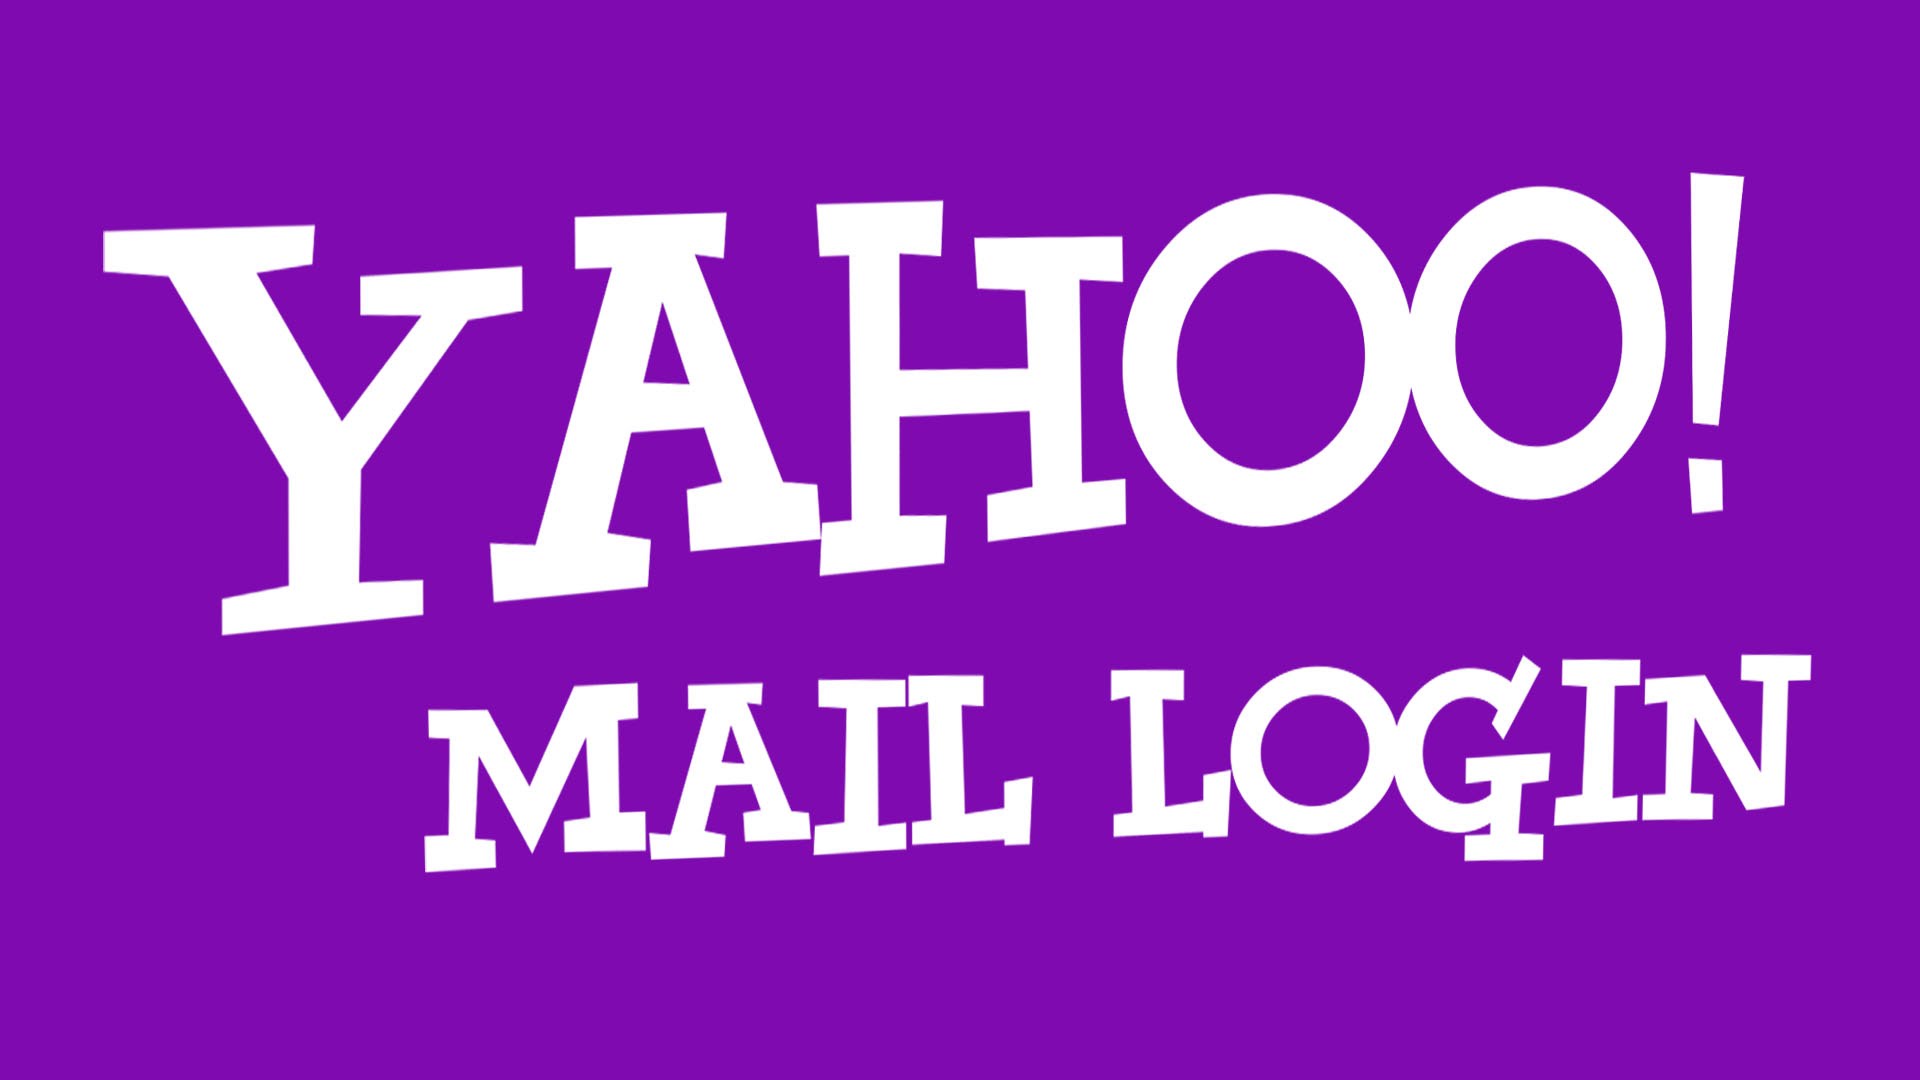 Www login yahoo Yahoo Mail Registration For Yahoo Wallet